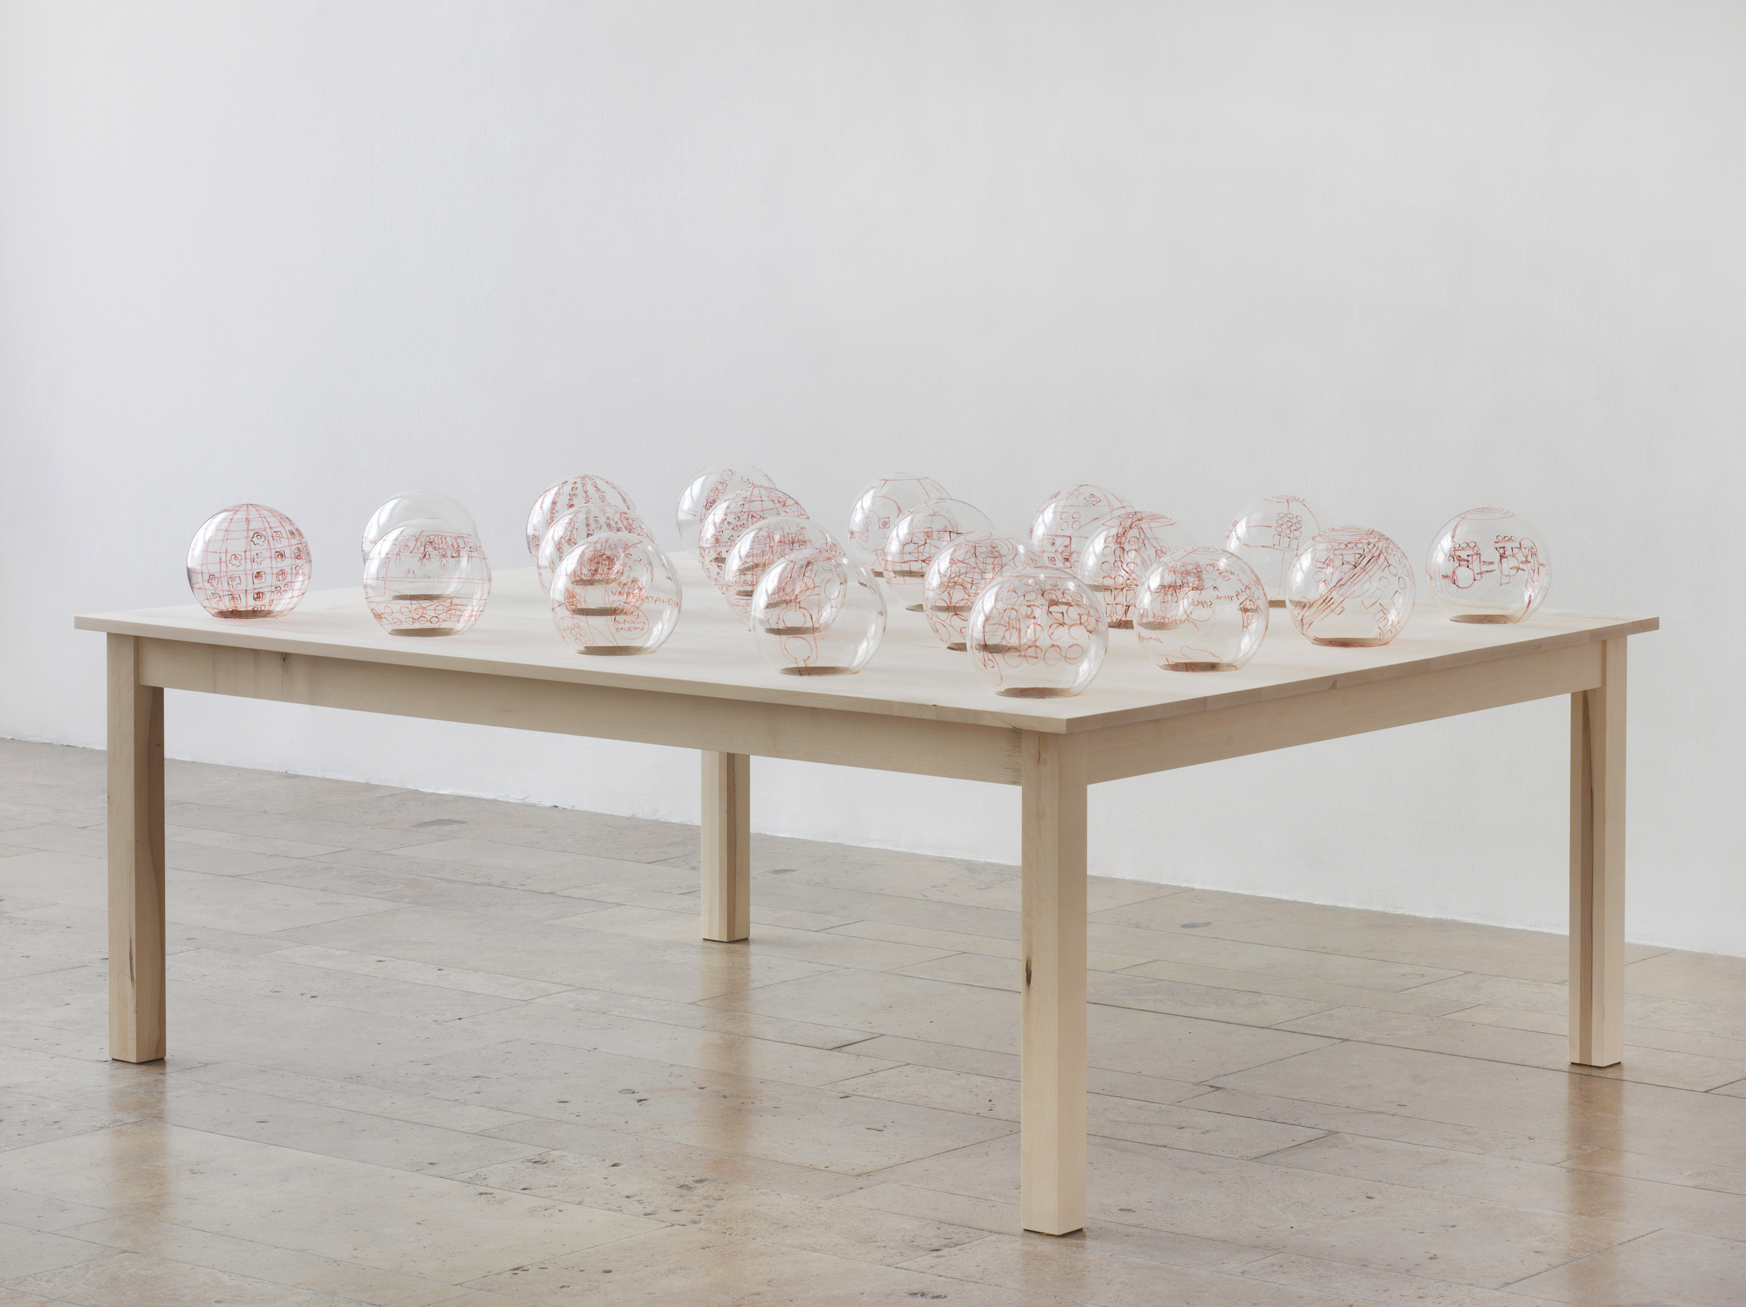 Matt Mullican. Untitled (20 Glass Balls)